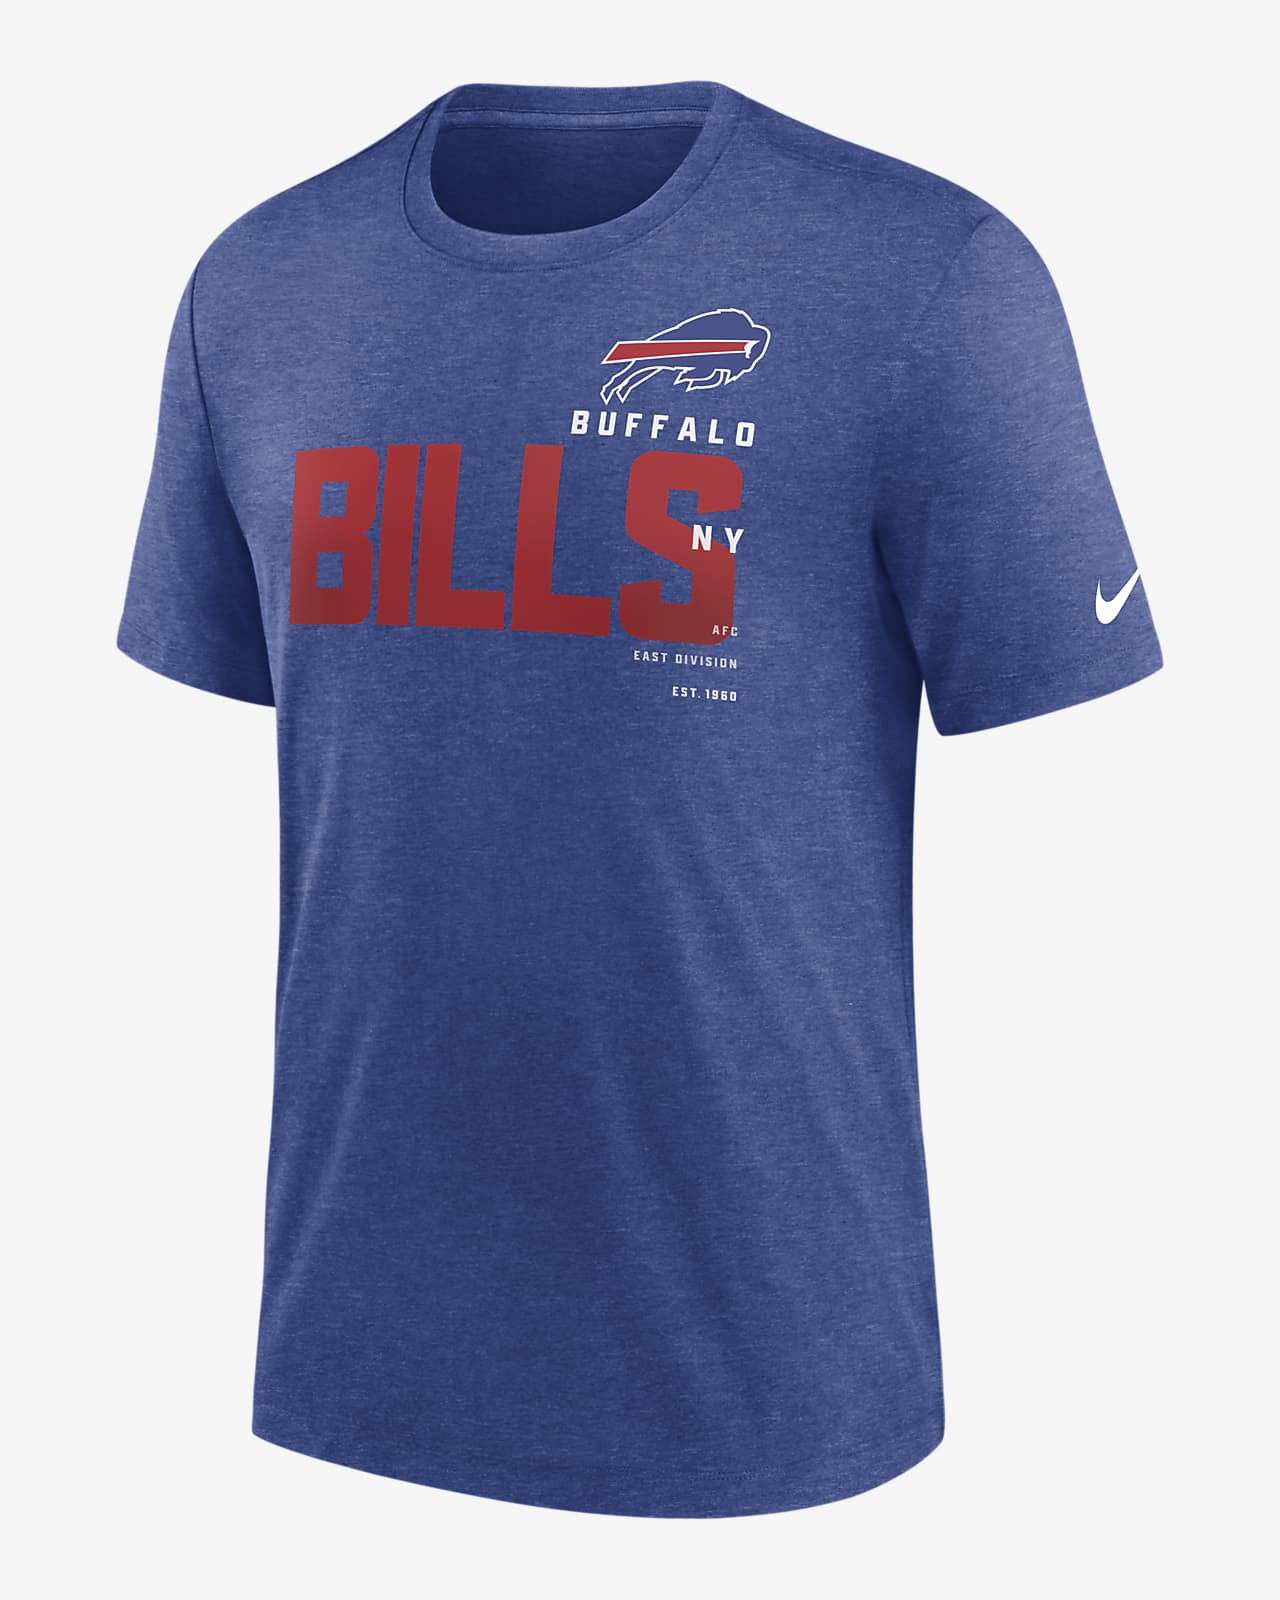 Team (NFL Buffalo Bills) Men's T-Shirt. Nike.com